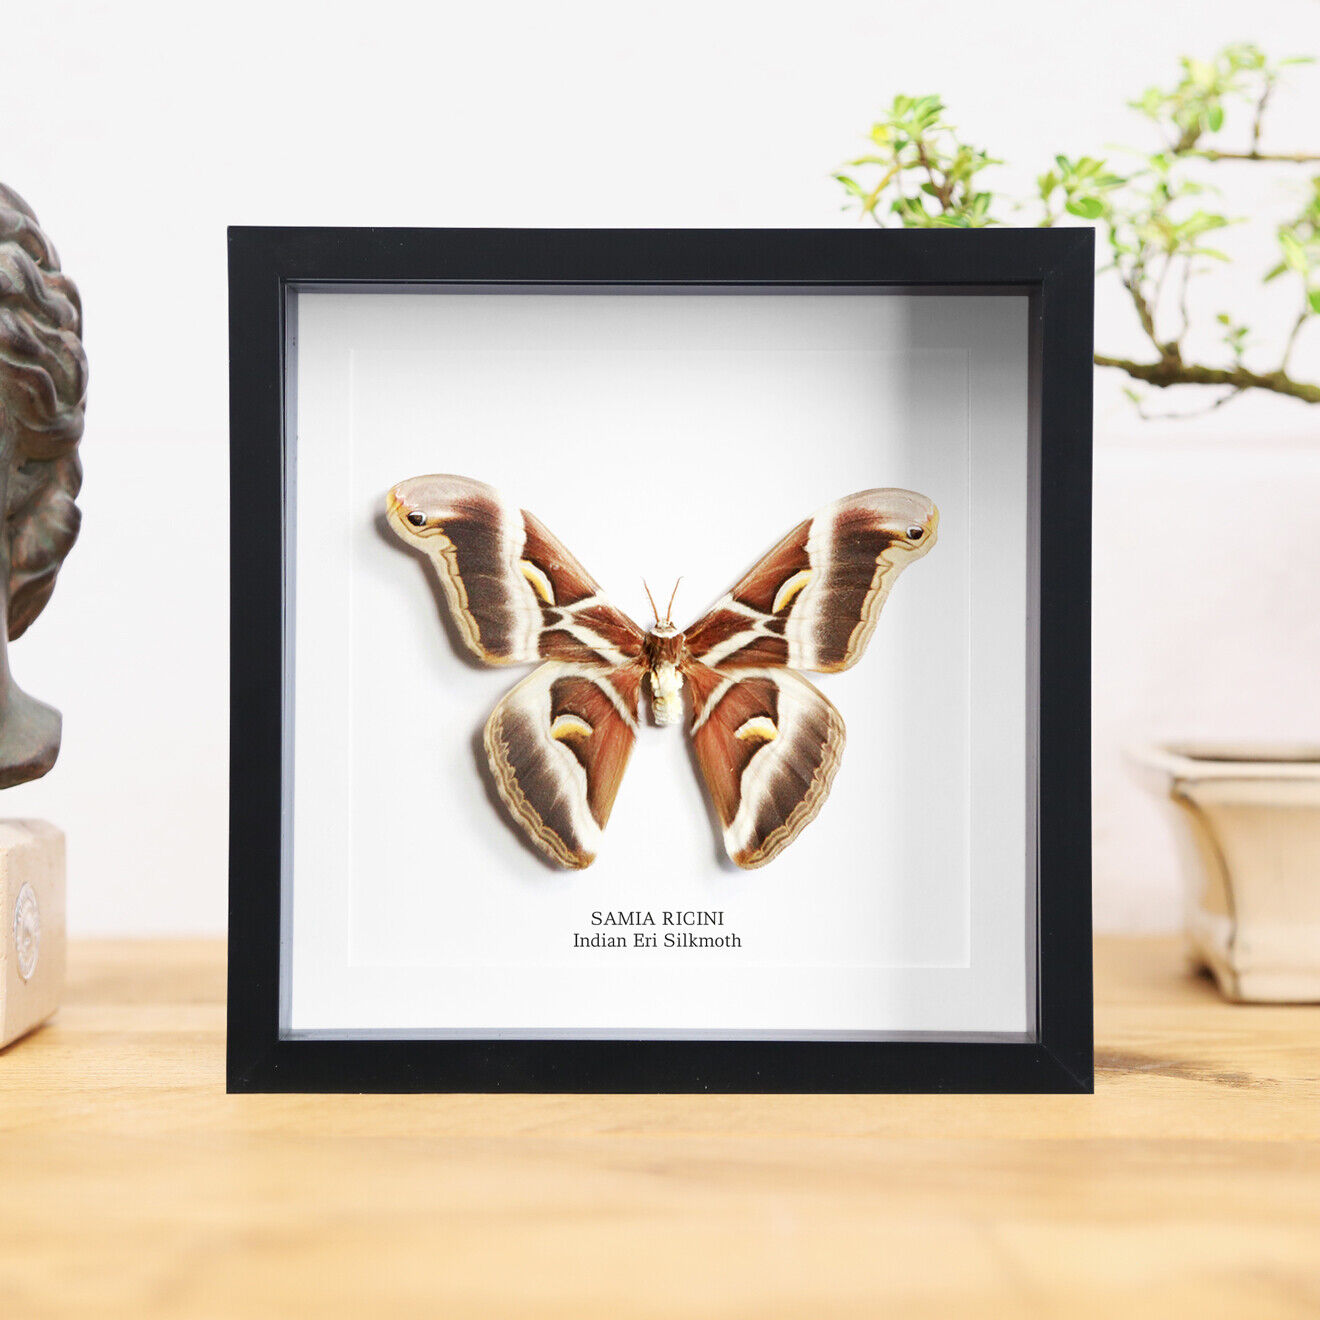  Indian Eri Silkmoth (Samia cynthia ricini)  Butterfly Frame / Home Decor